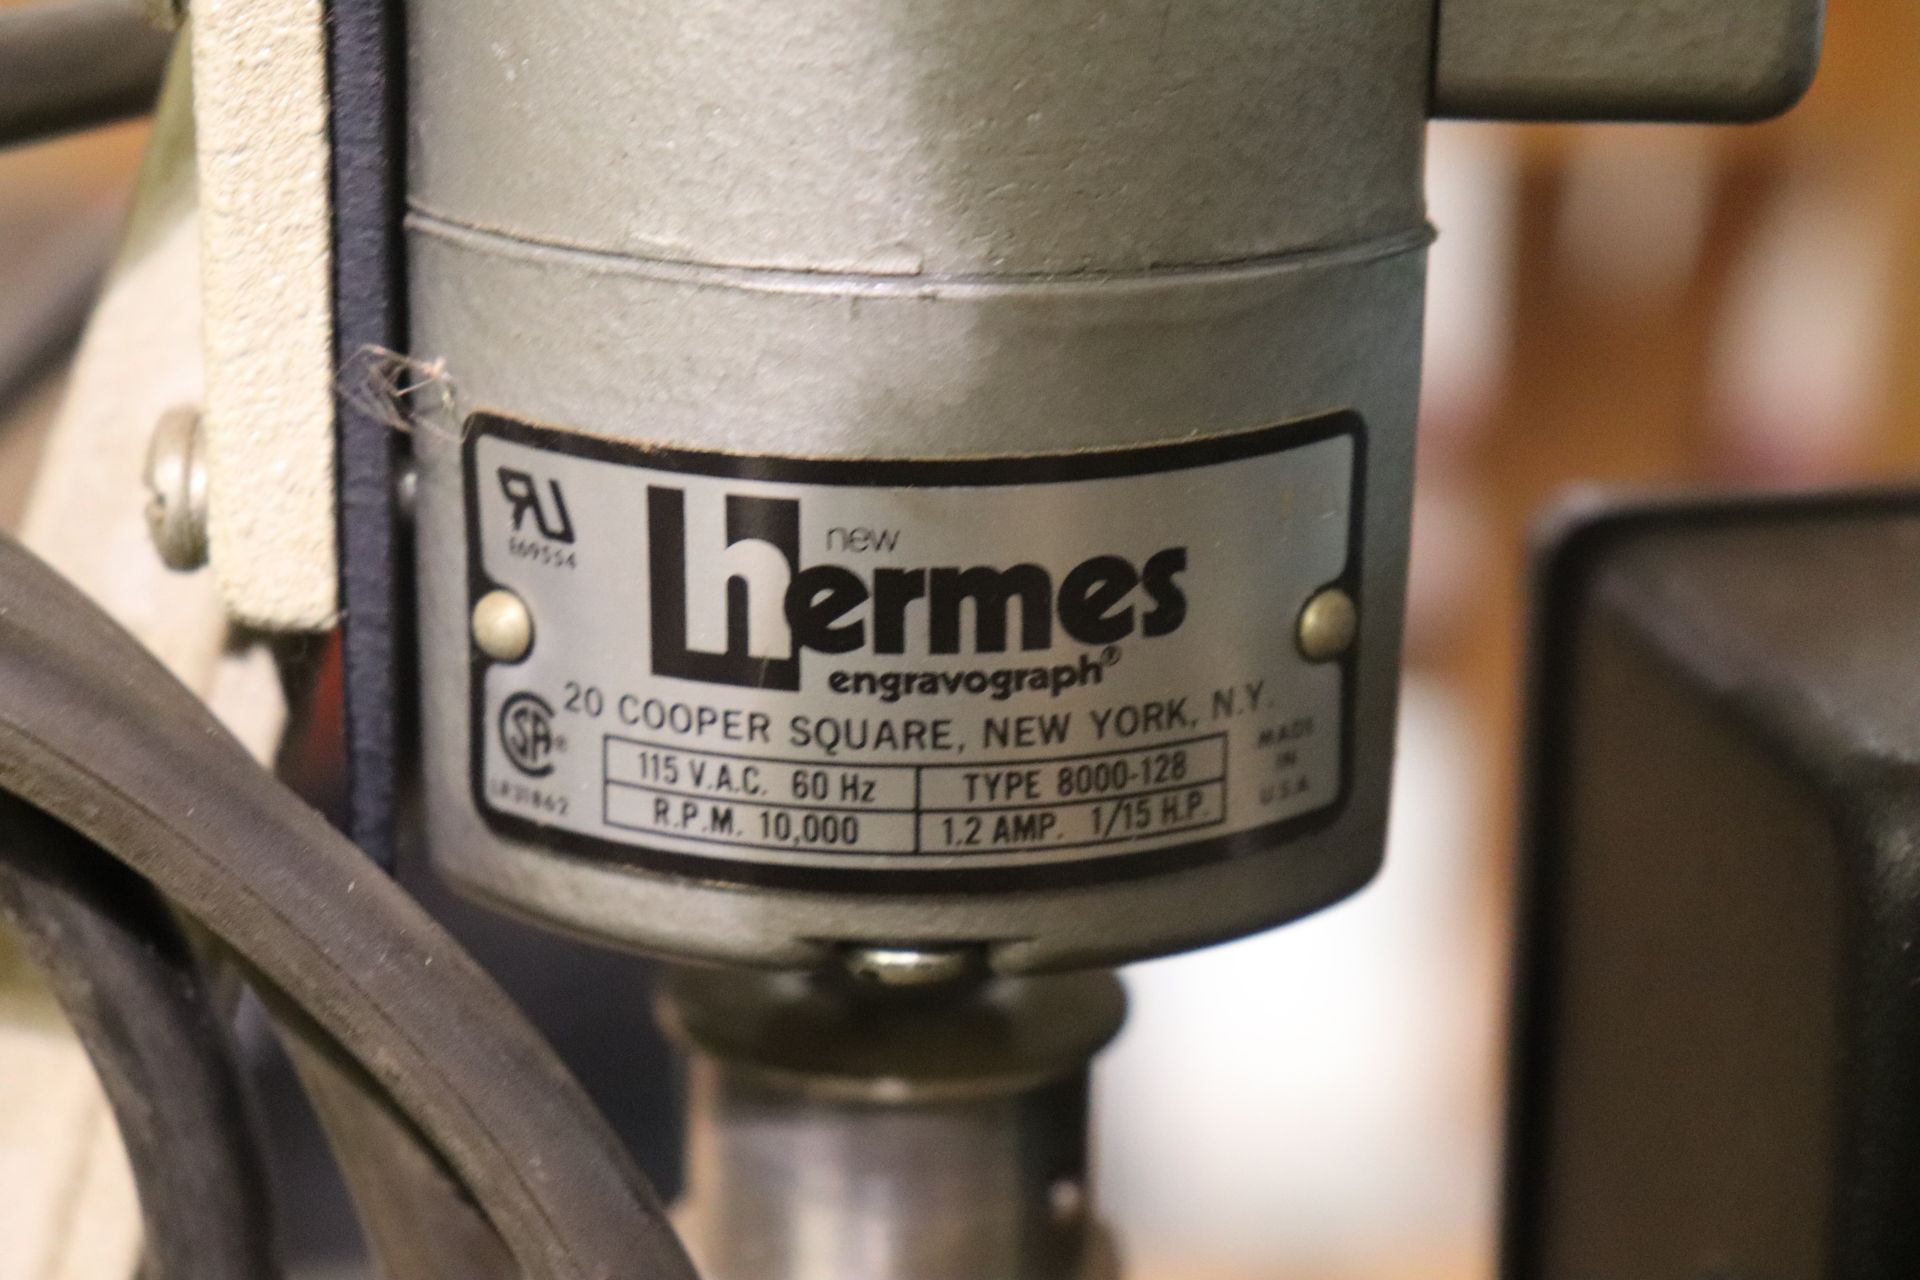 Hermes engravograph, serial #3400010004 - Image 3 of 3